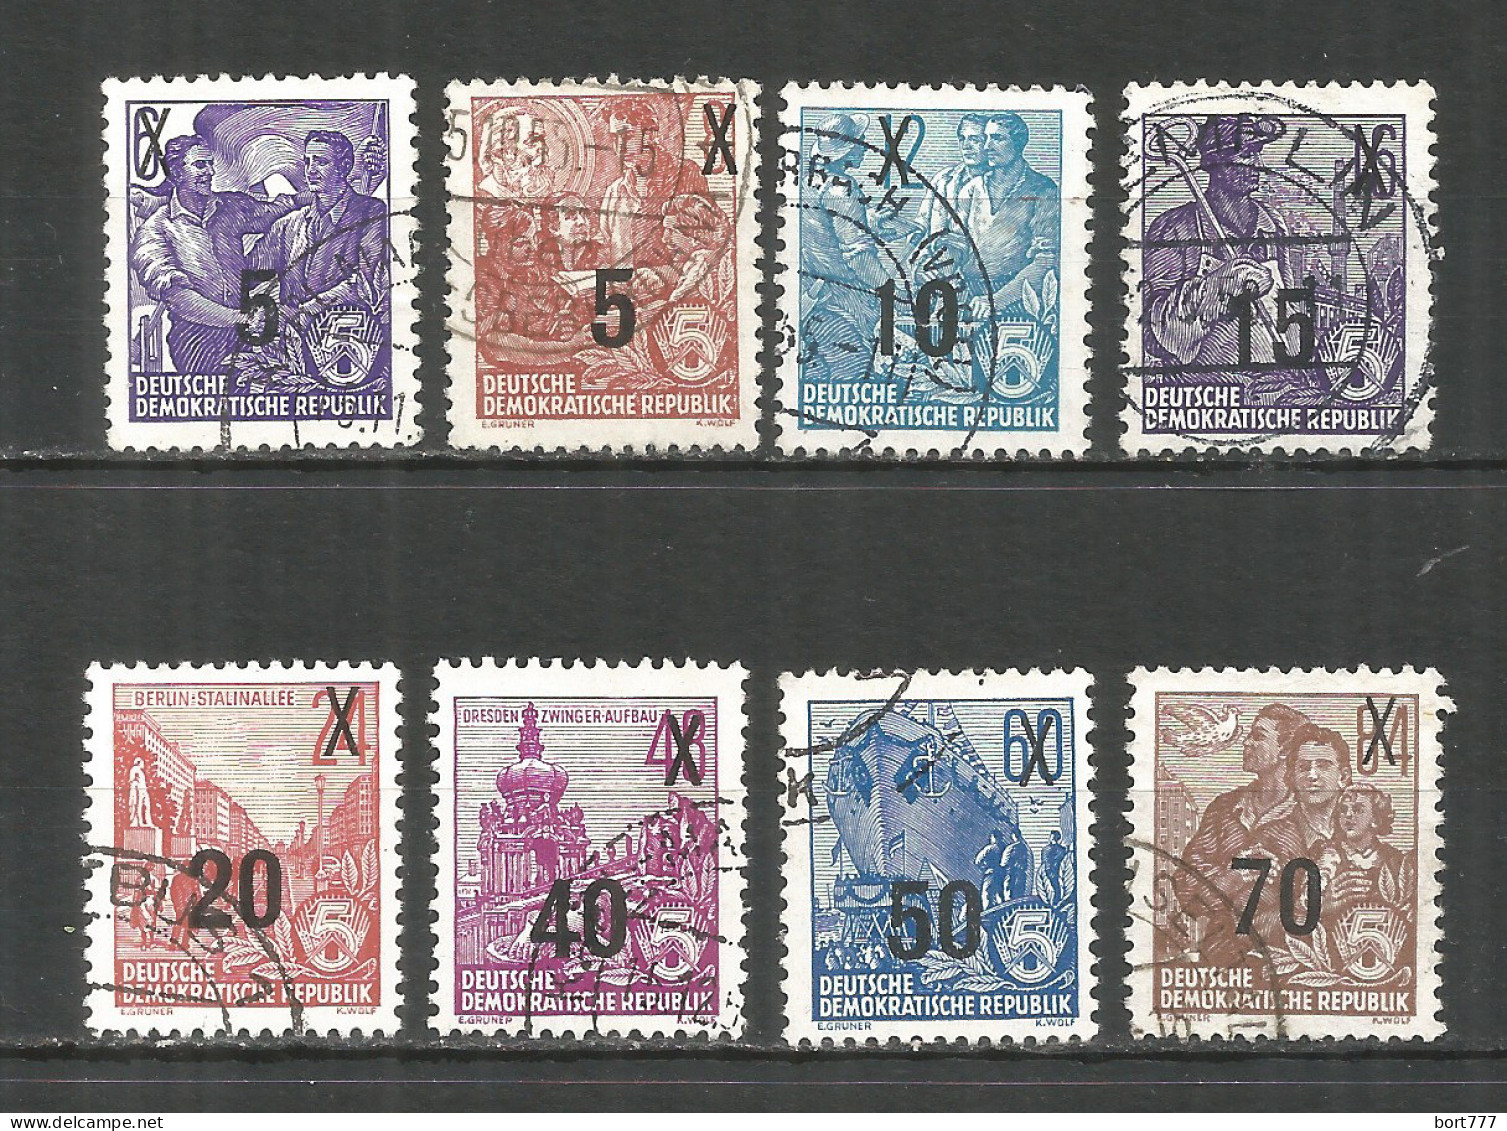 Germany DDR 1954 Year Used Stamps Mi.# 435-442 - Gebruikt